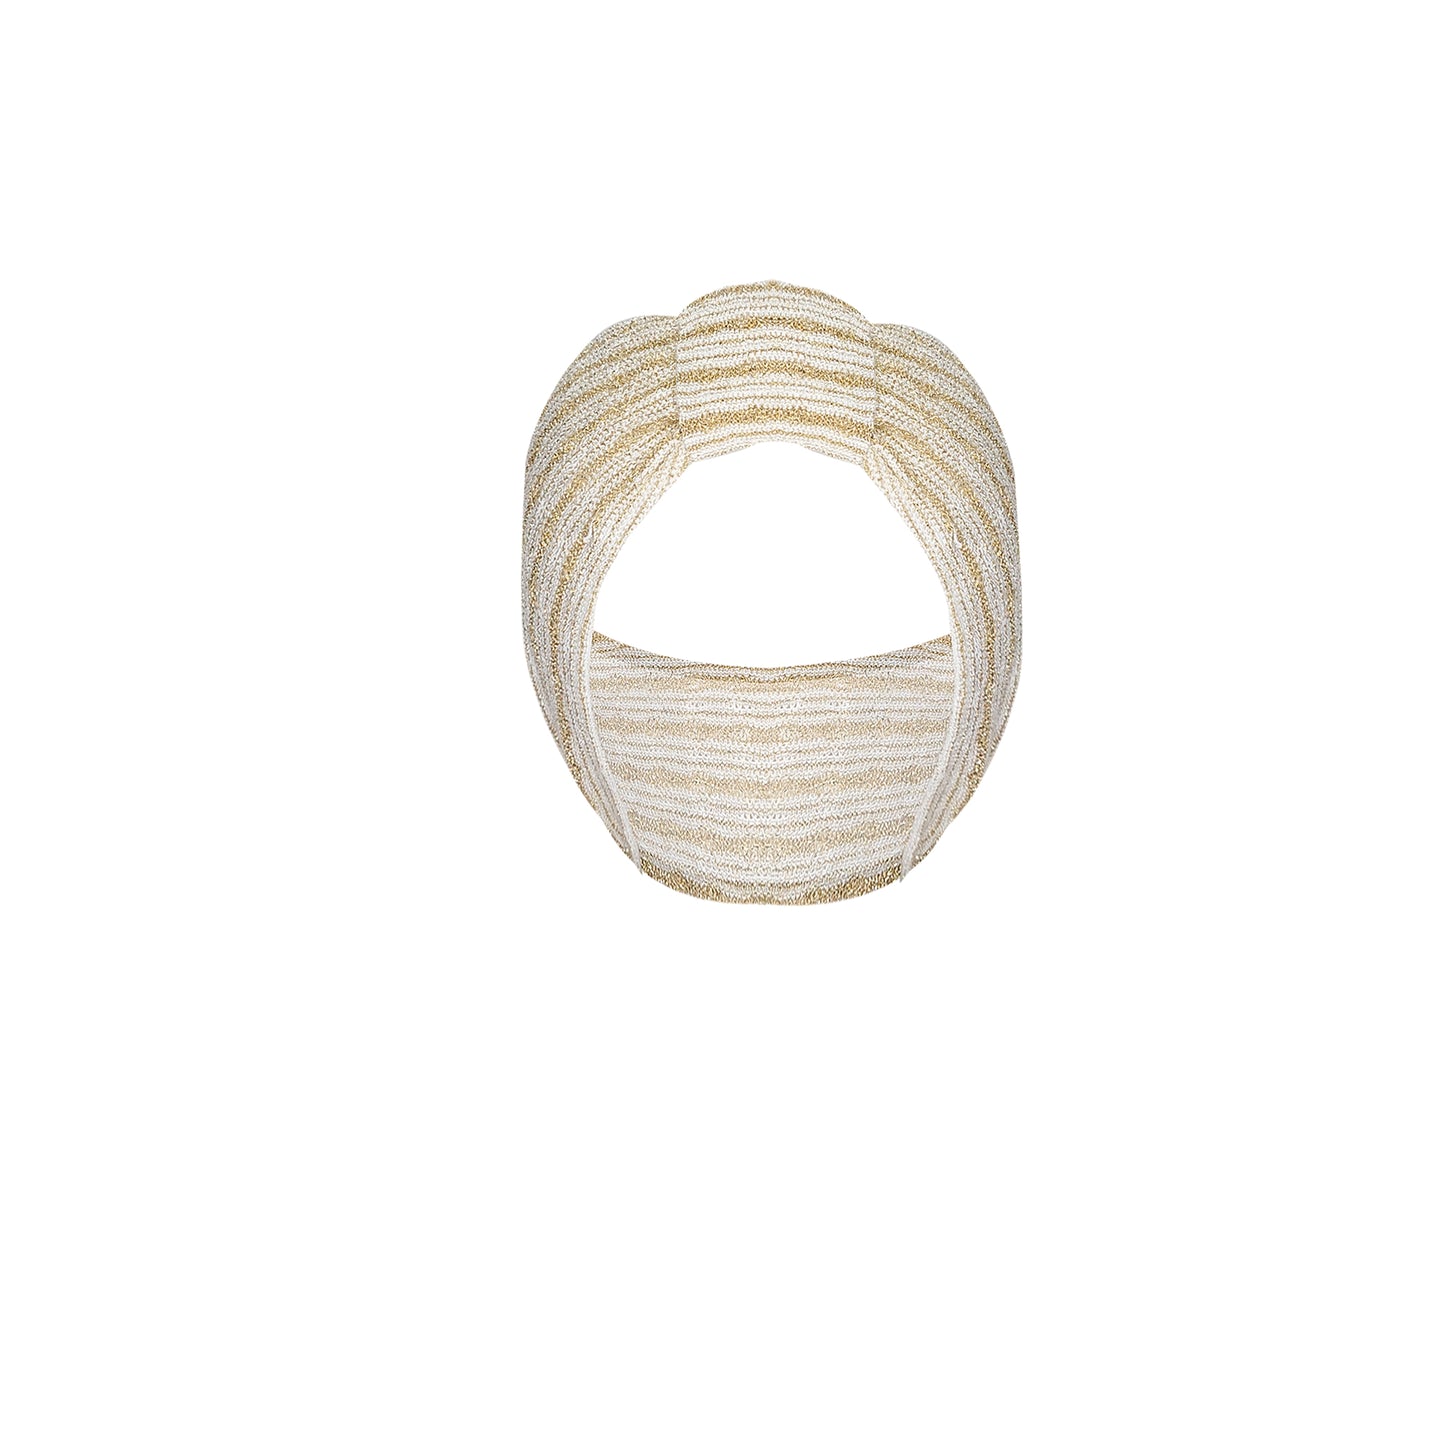 Headband in Drop Stitch Knit White/Gold